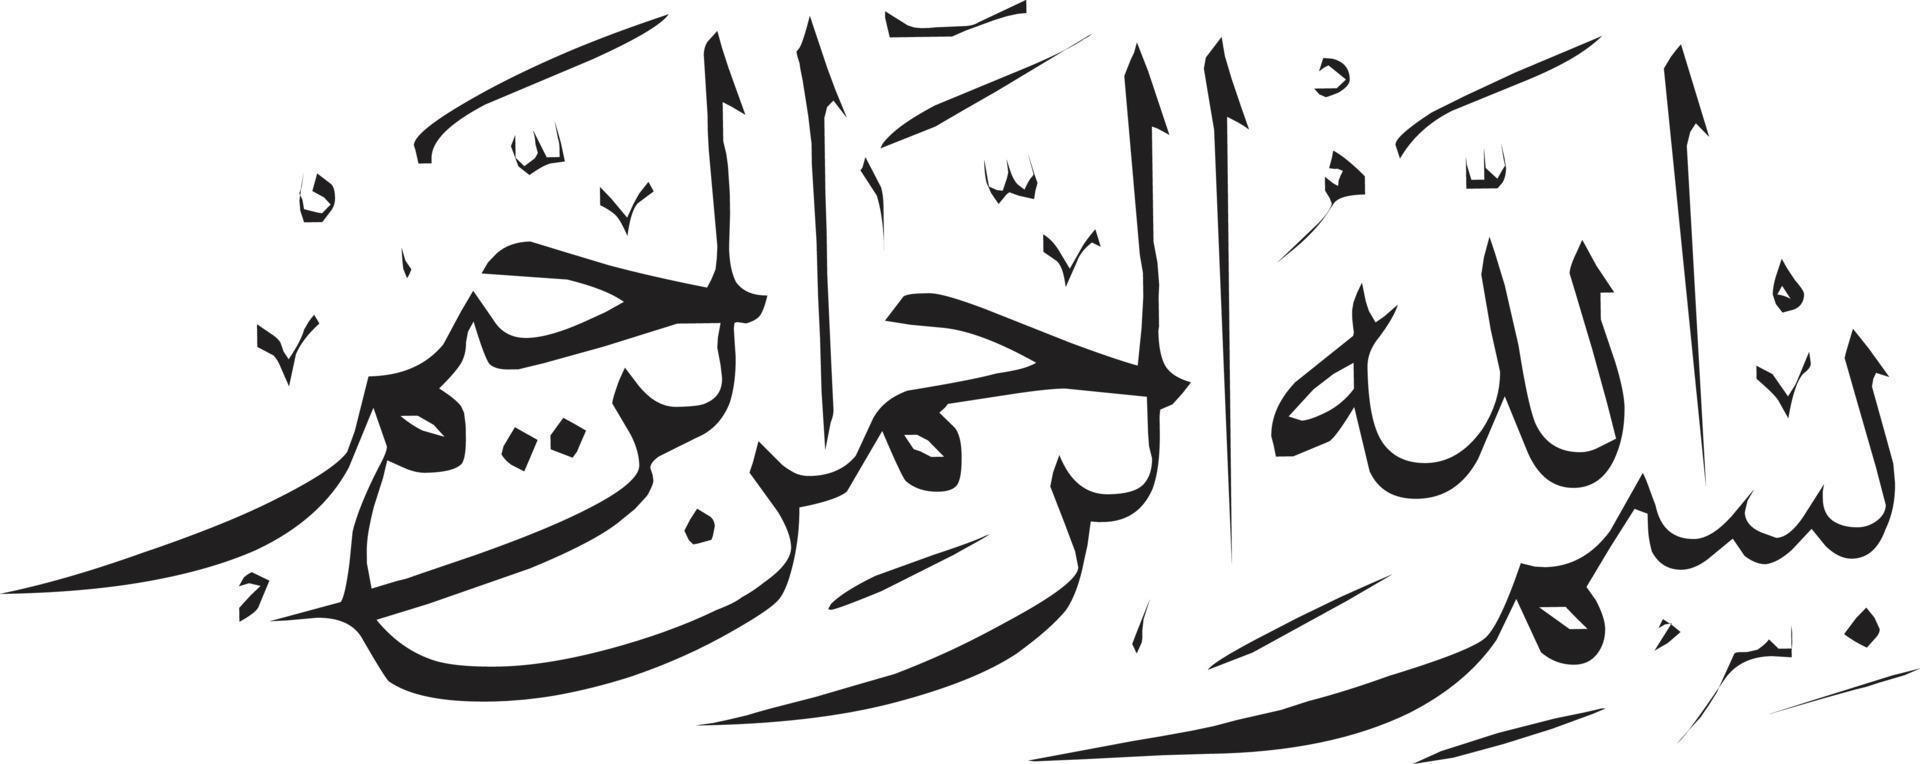 Bismila urdu Islamic Calligraphy Free Vector